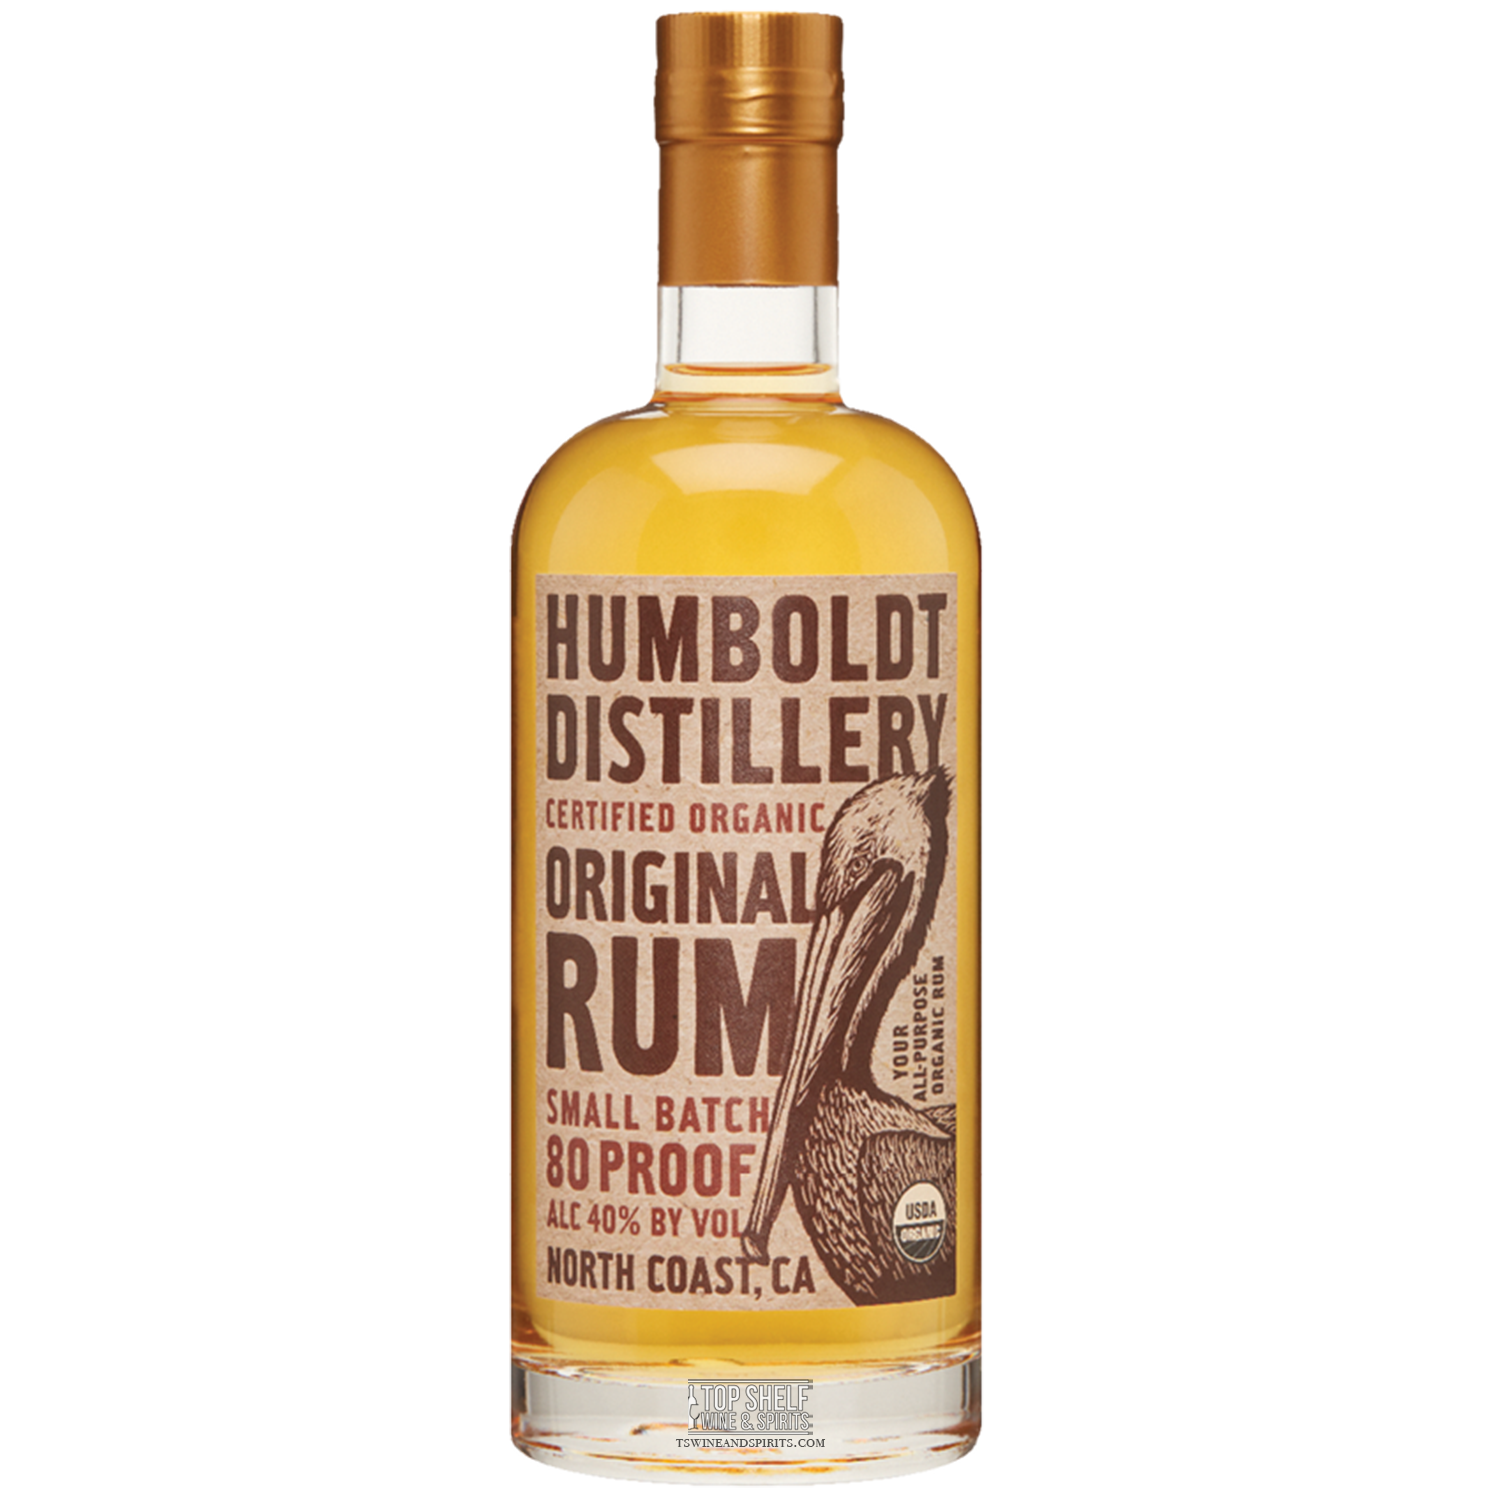 Humboldt Distillery Original Rum Small Batch